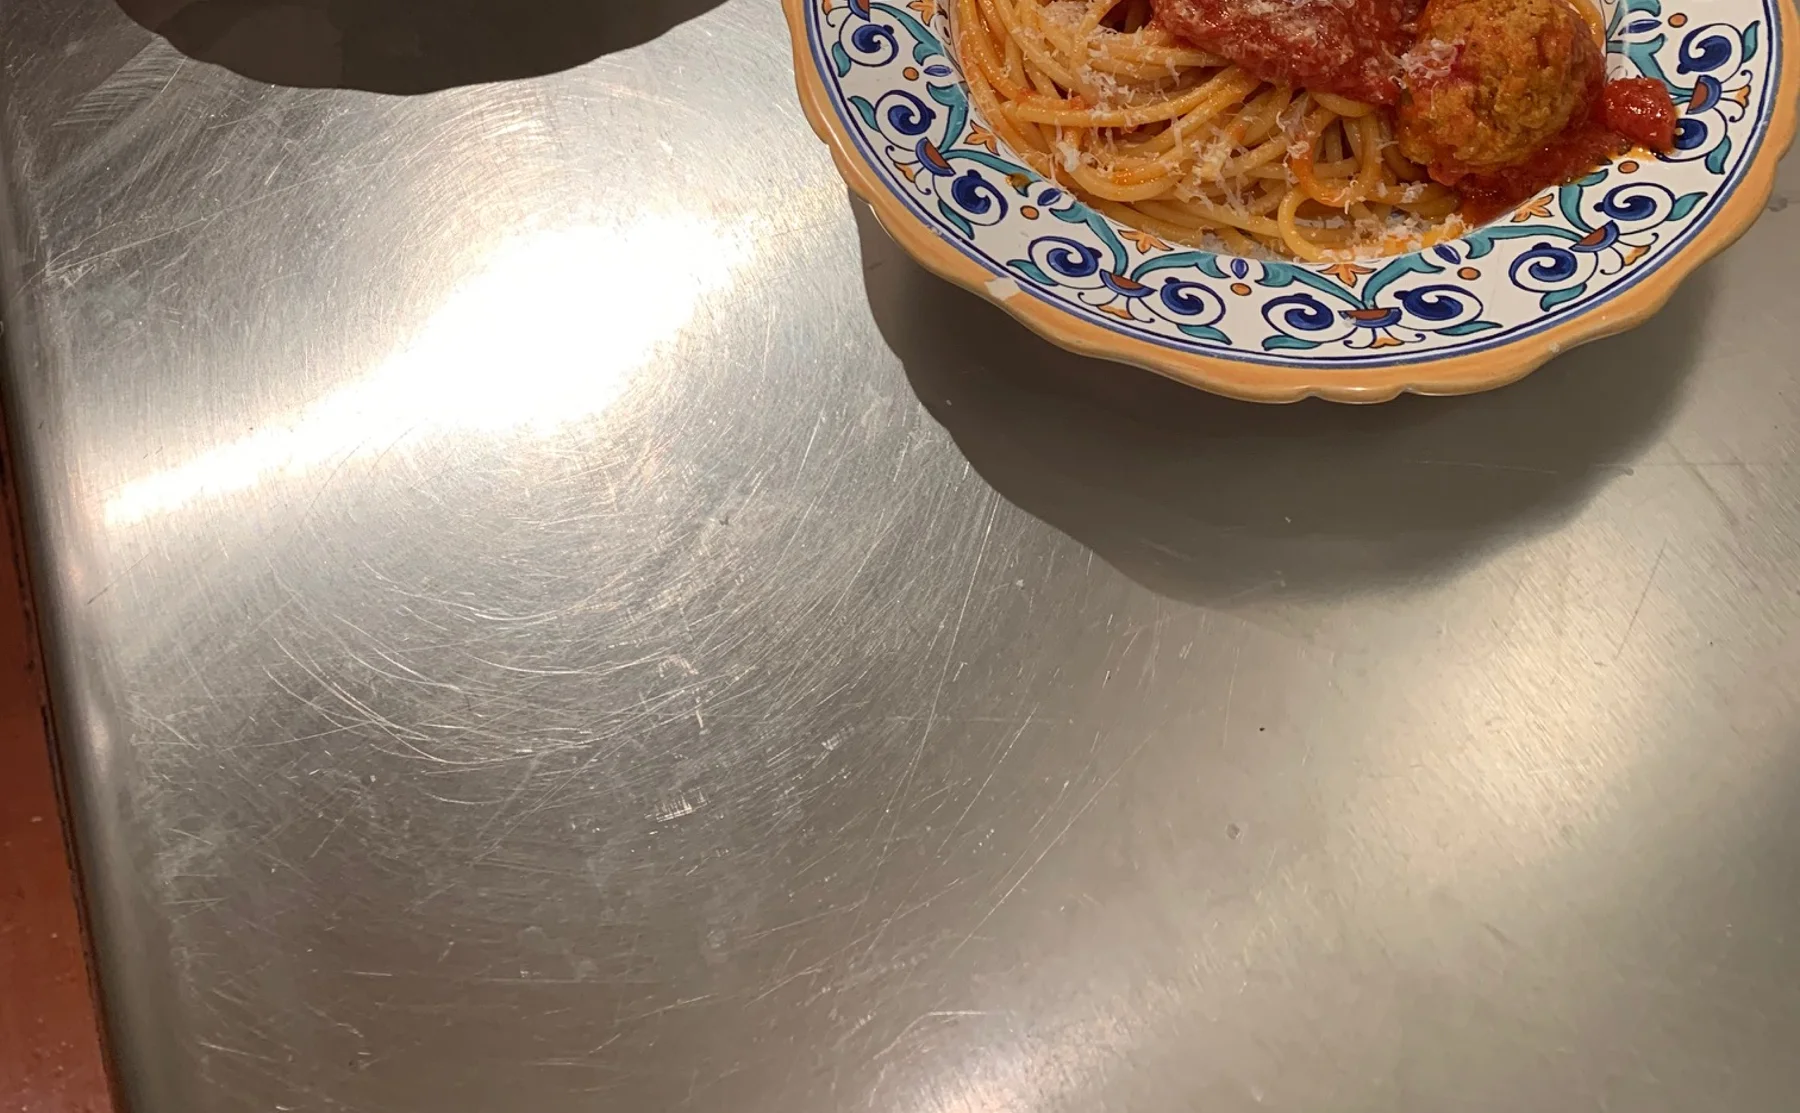 Rustic Italian Meatball Supper - 1165165